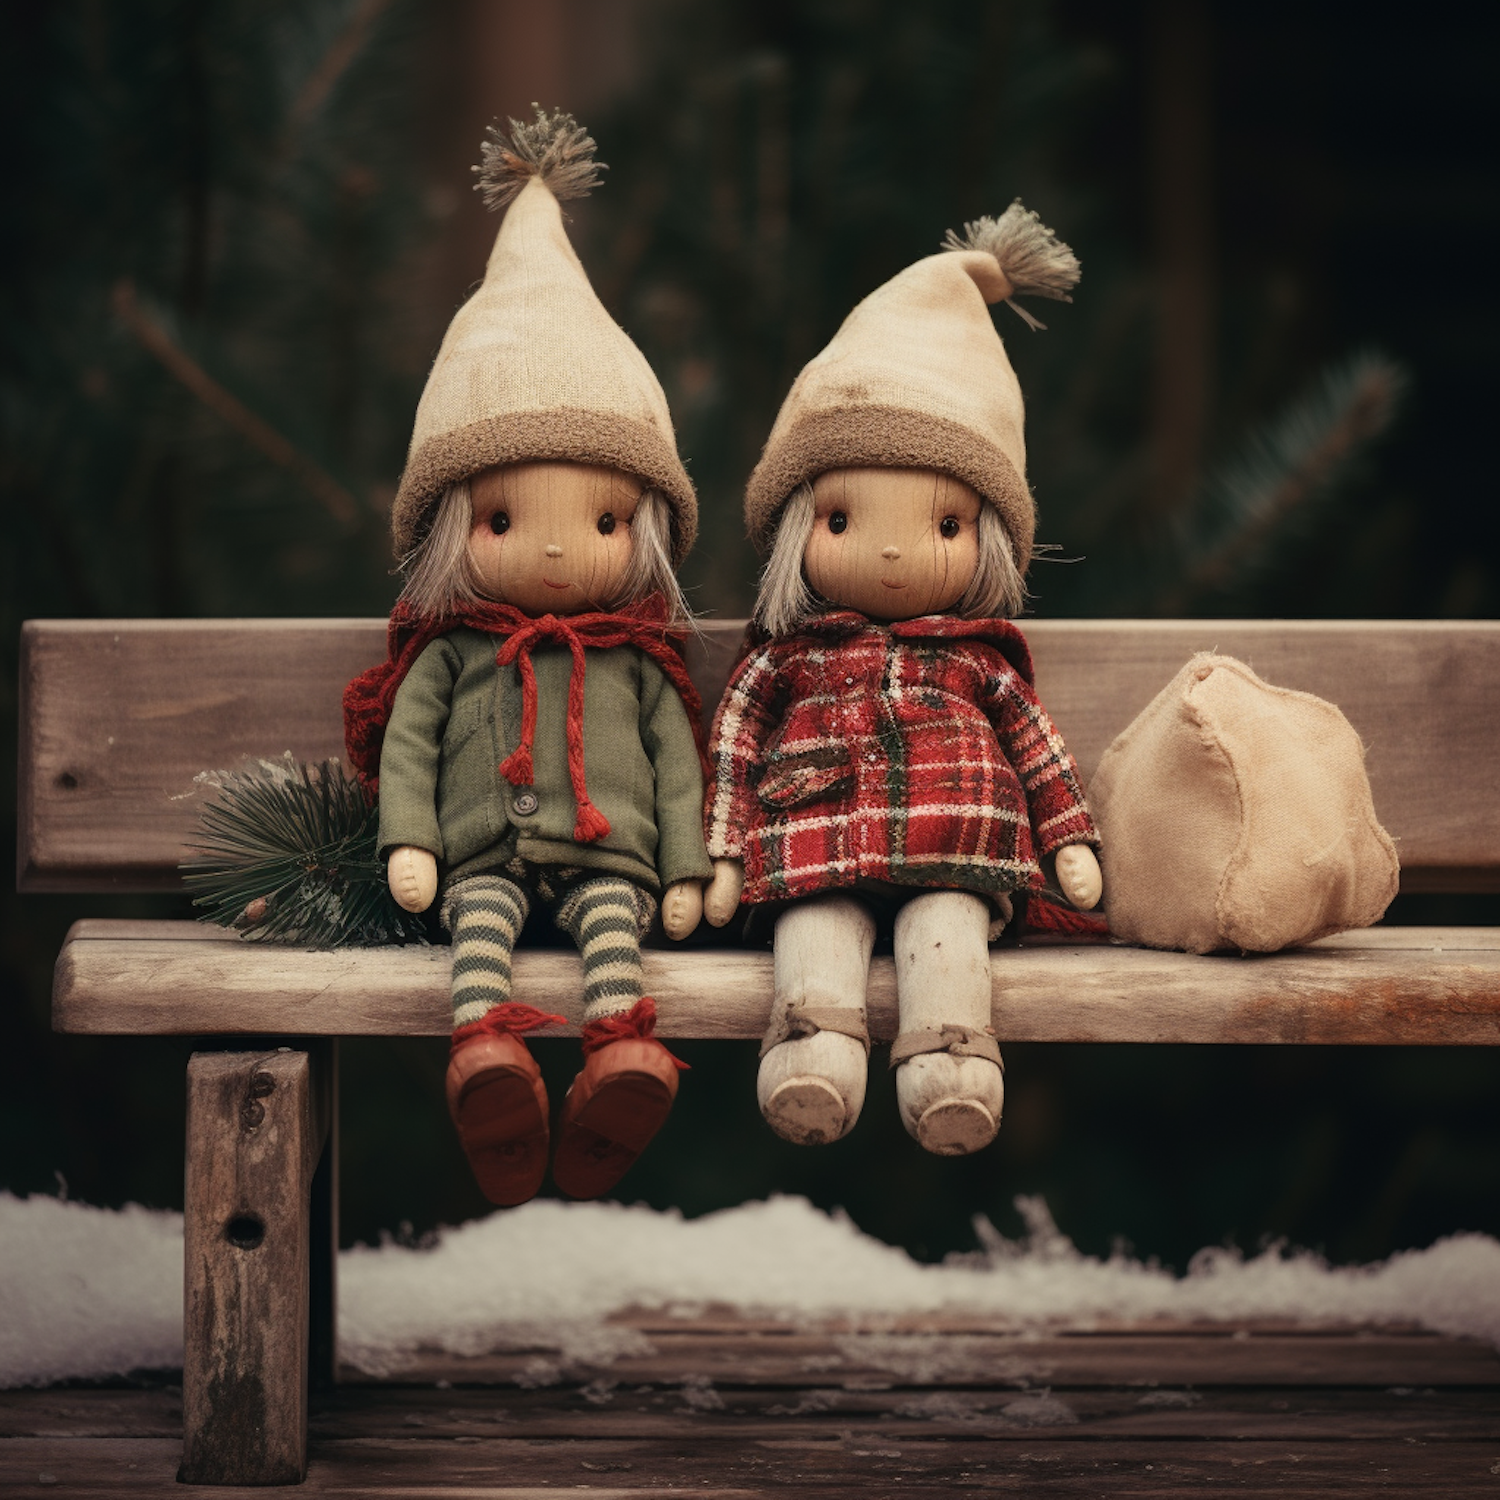 Festive Winter Companions on a Bench